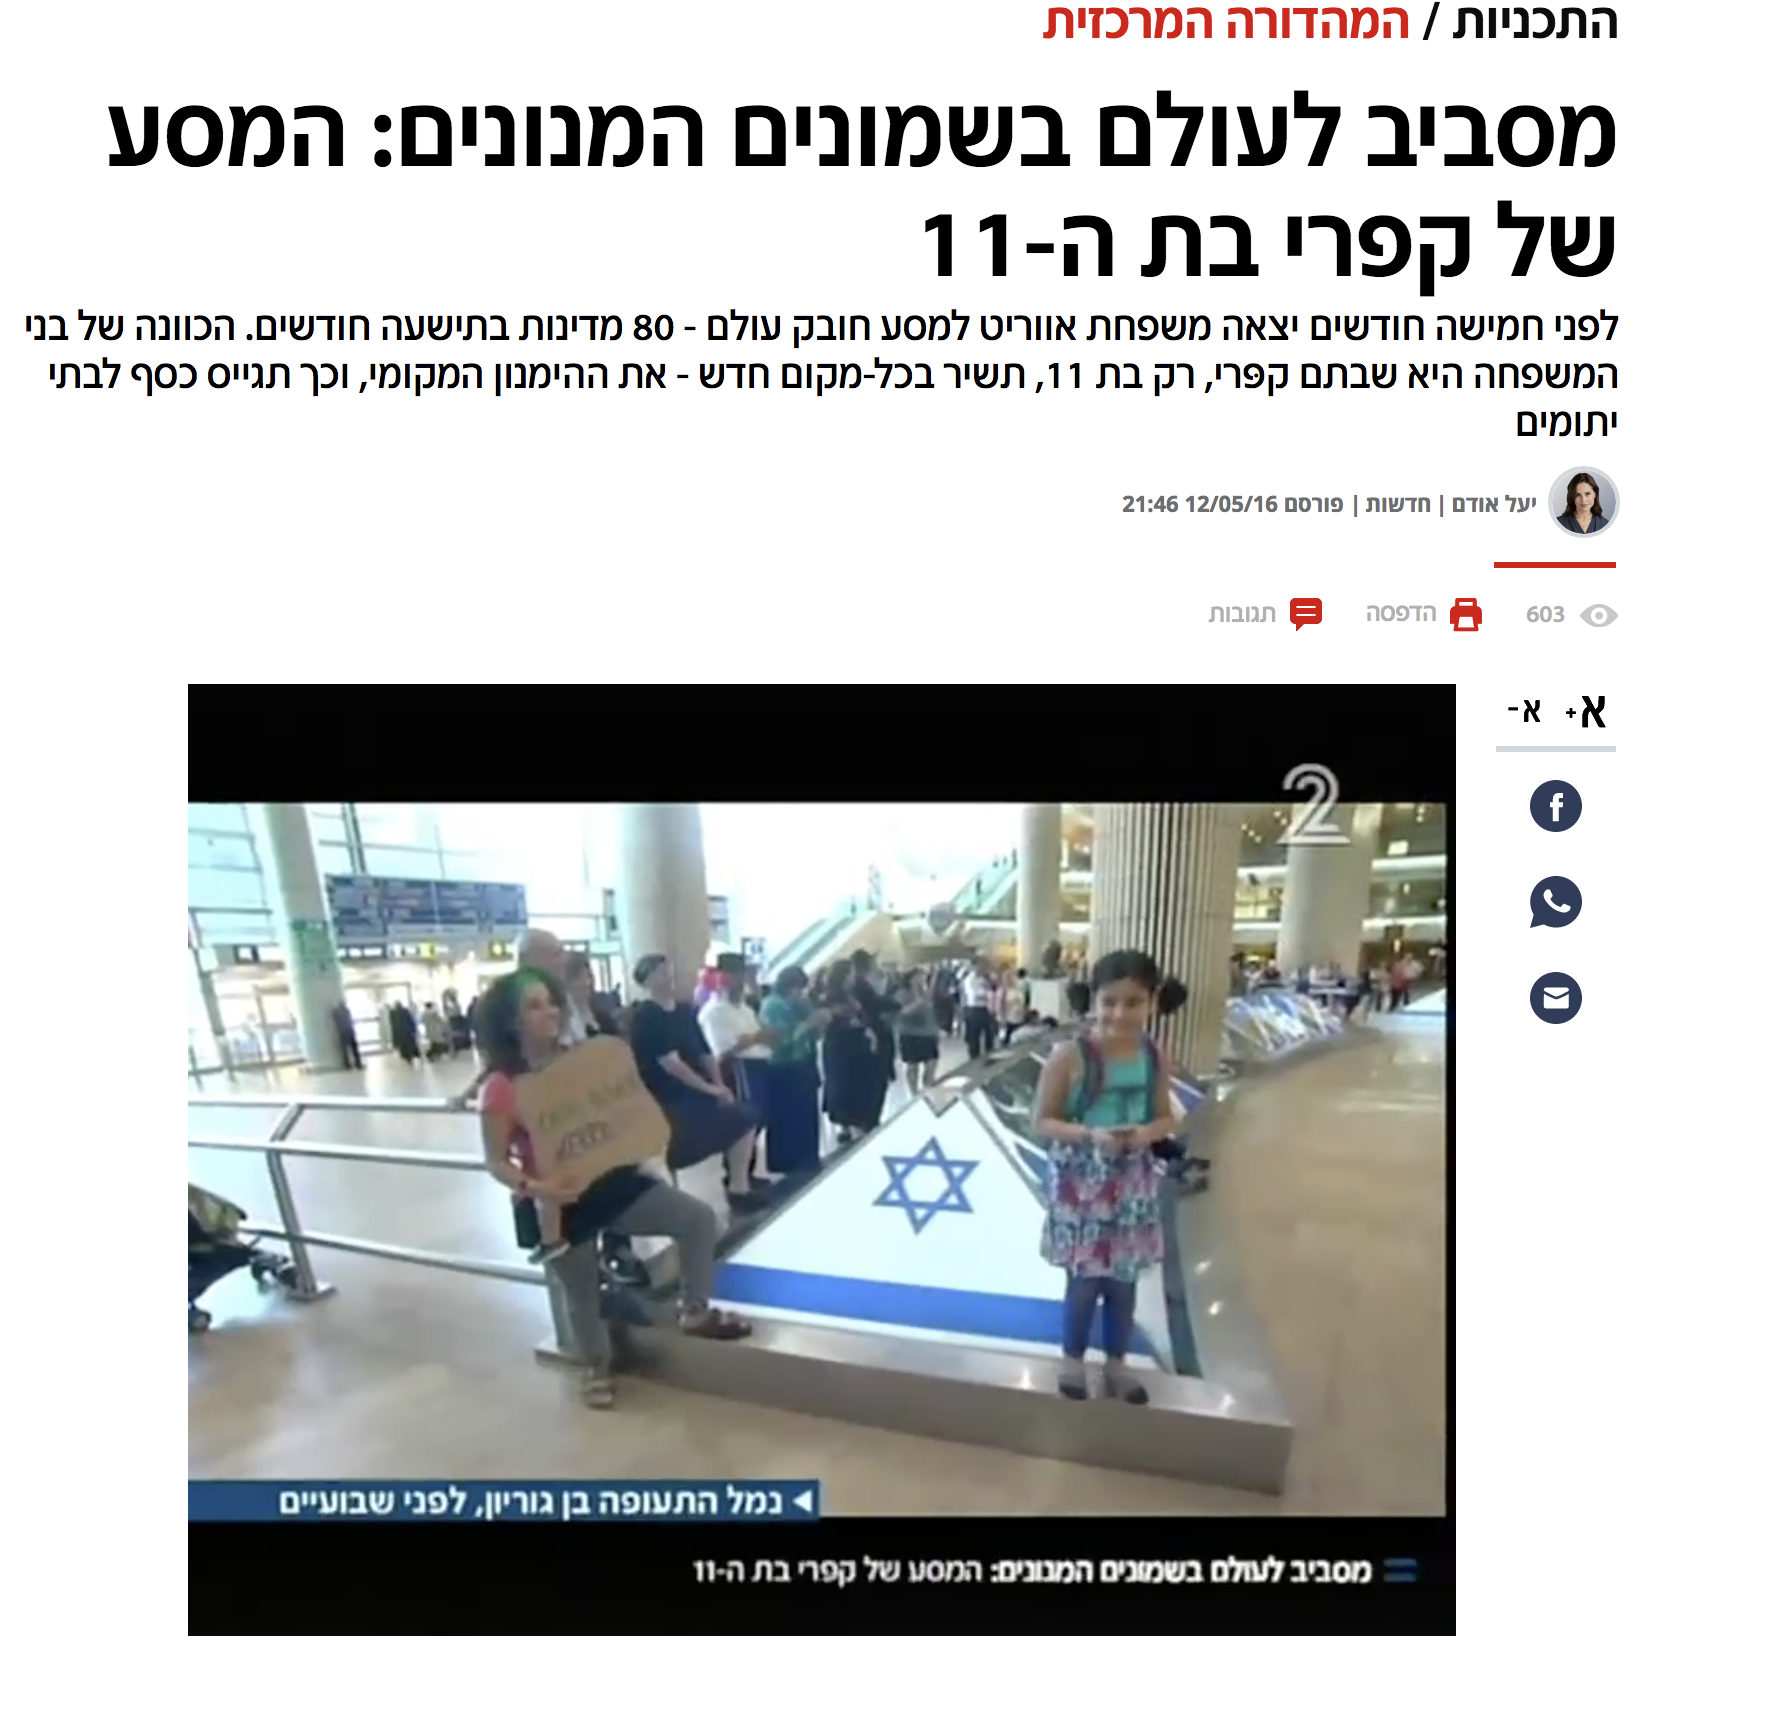 Israel: National News